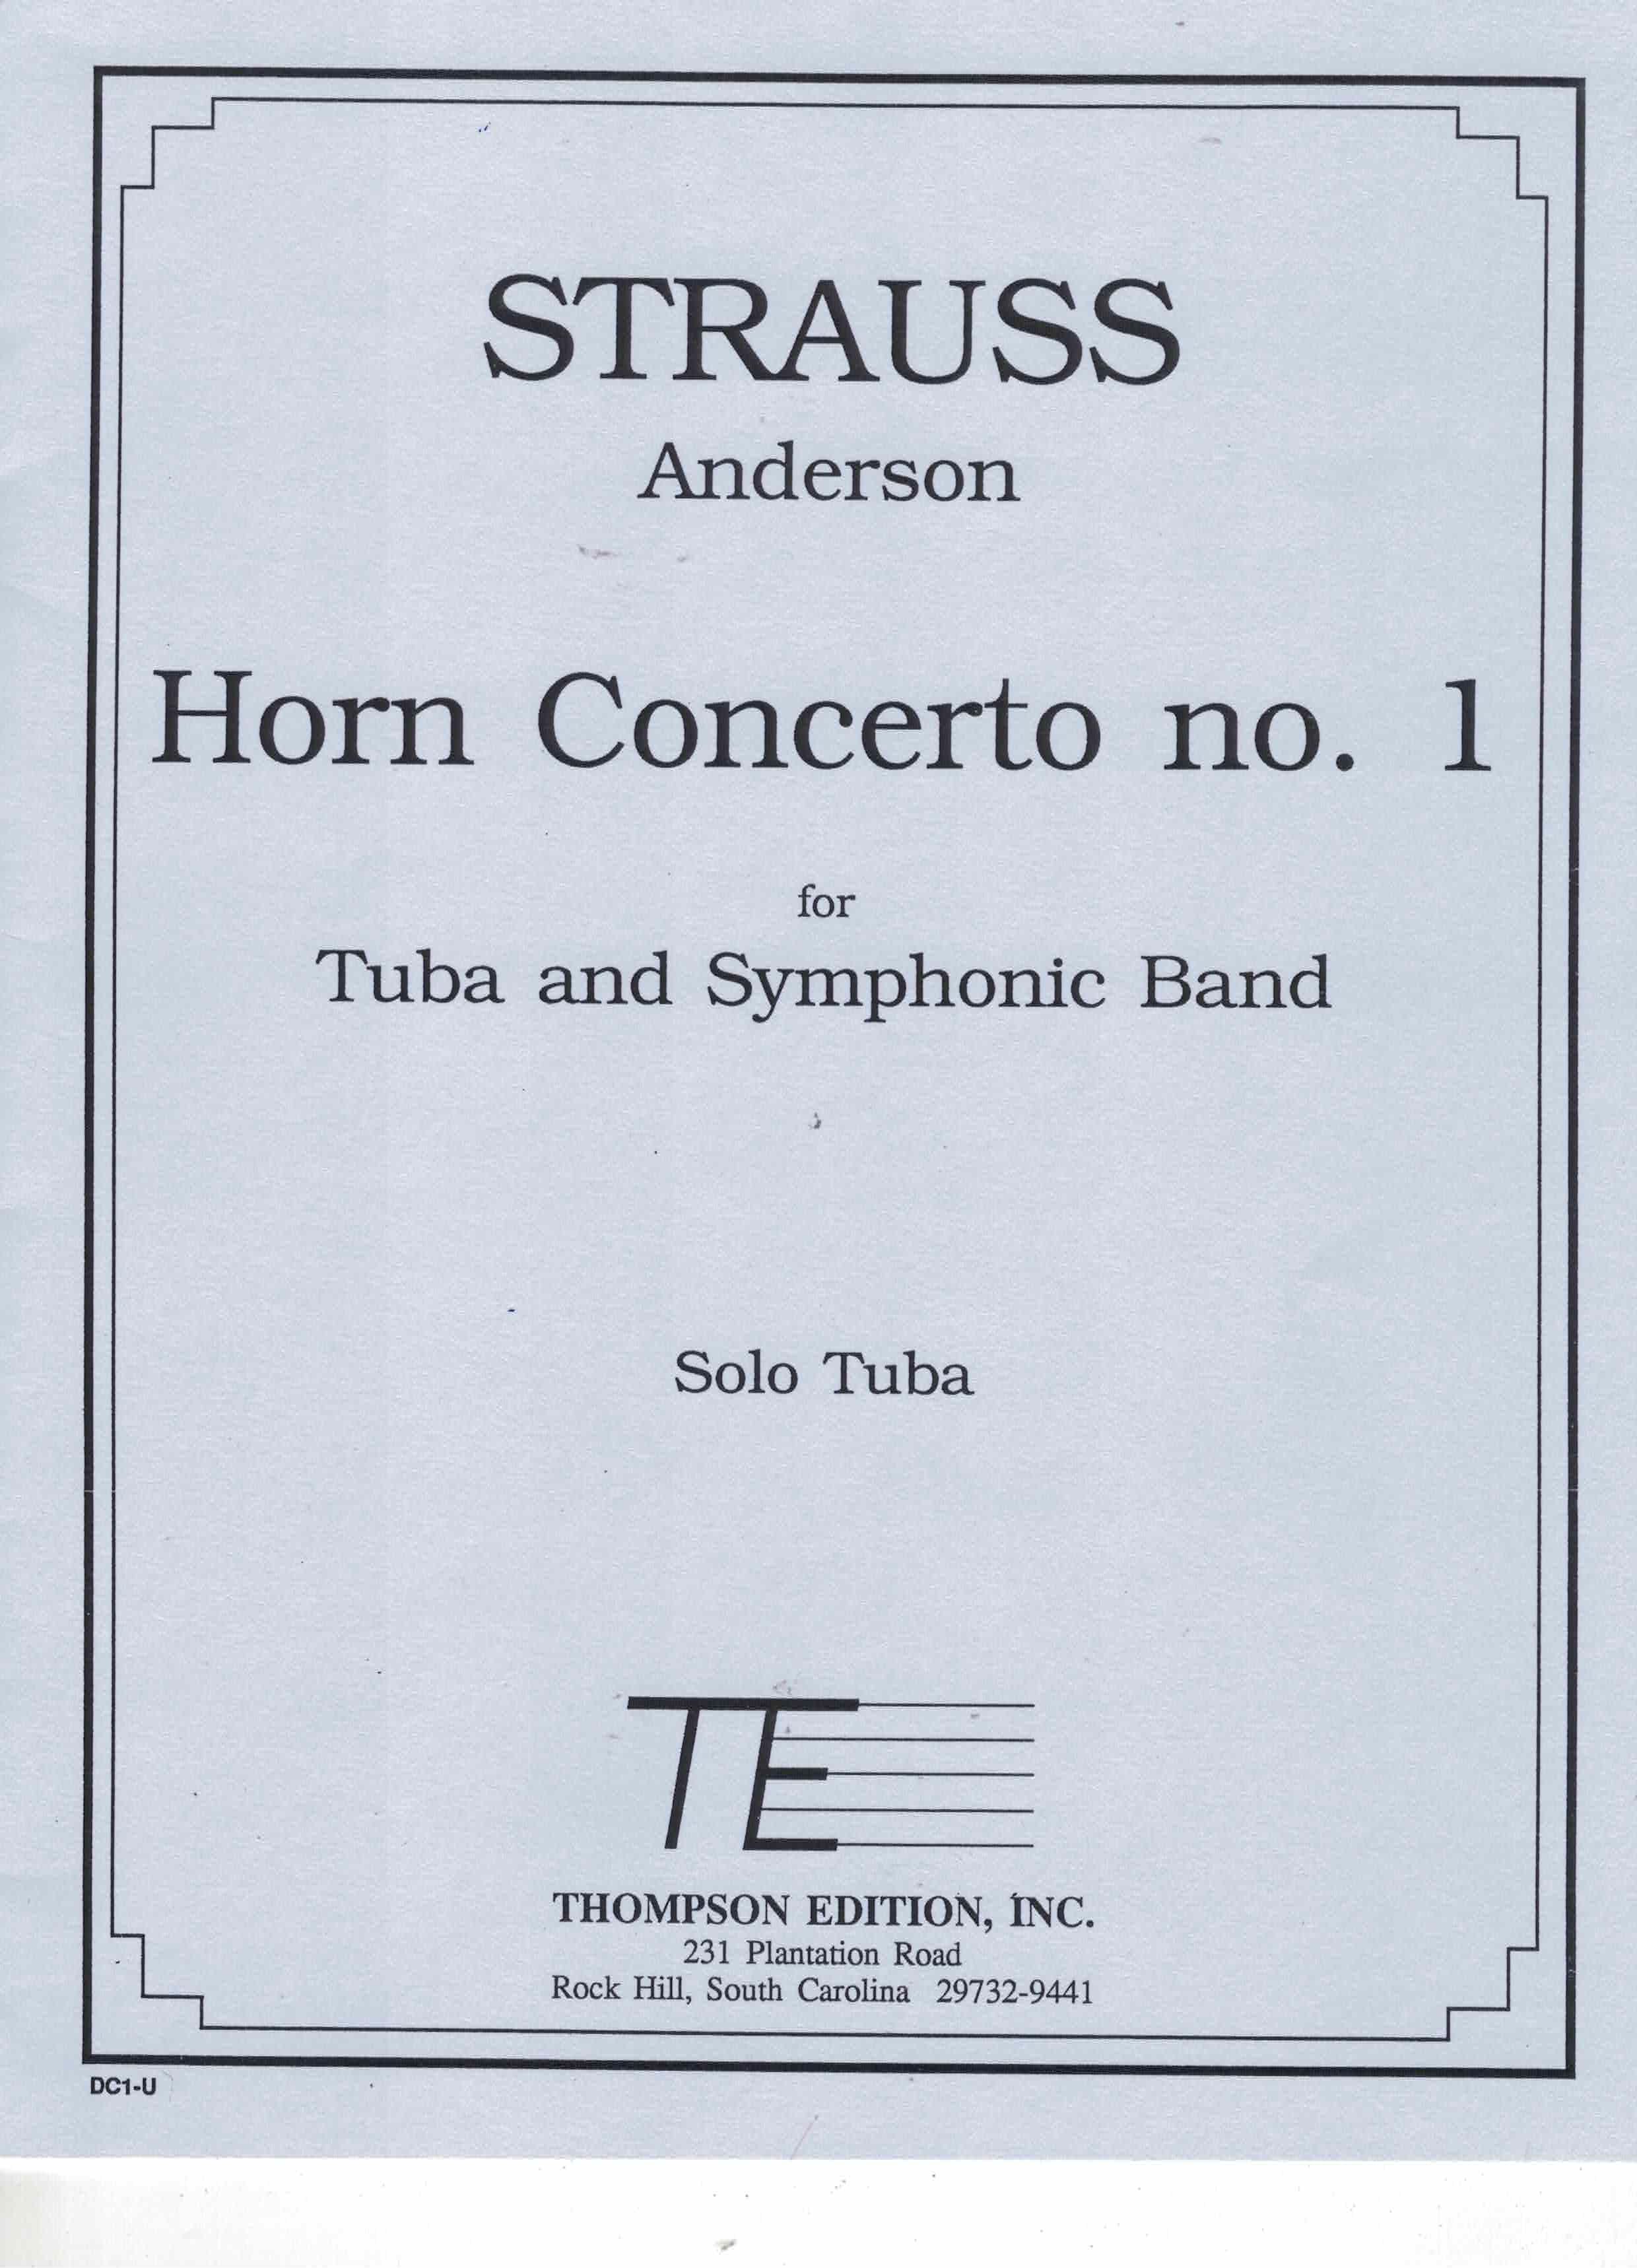 Hornkonzert 1, R. Strauss, Tuba Solostimme, arr Anderson